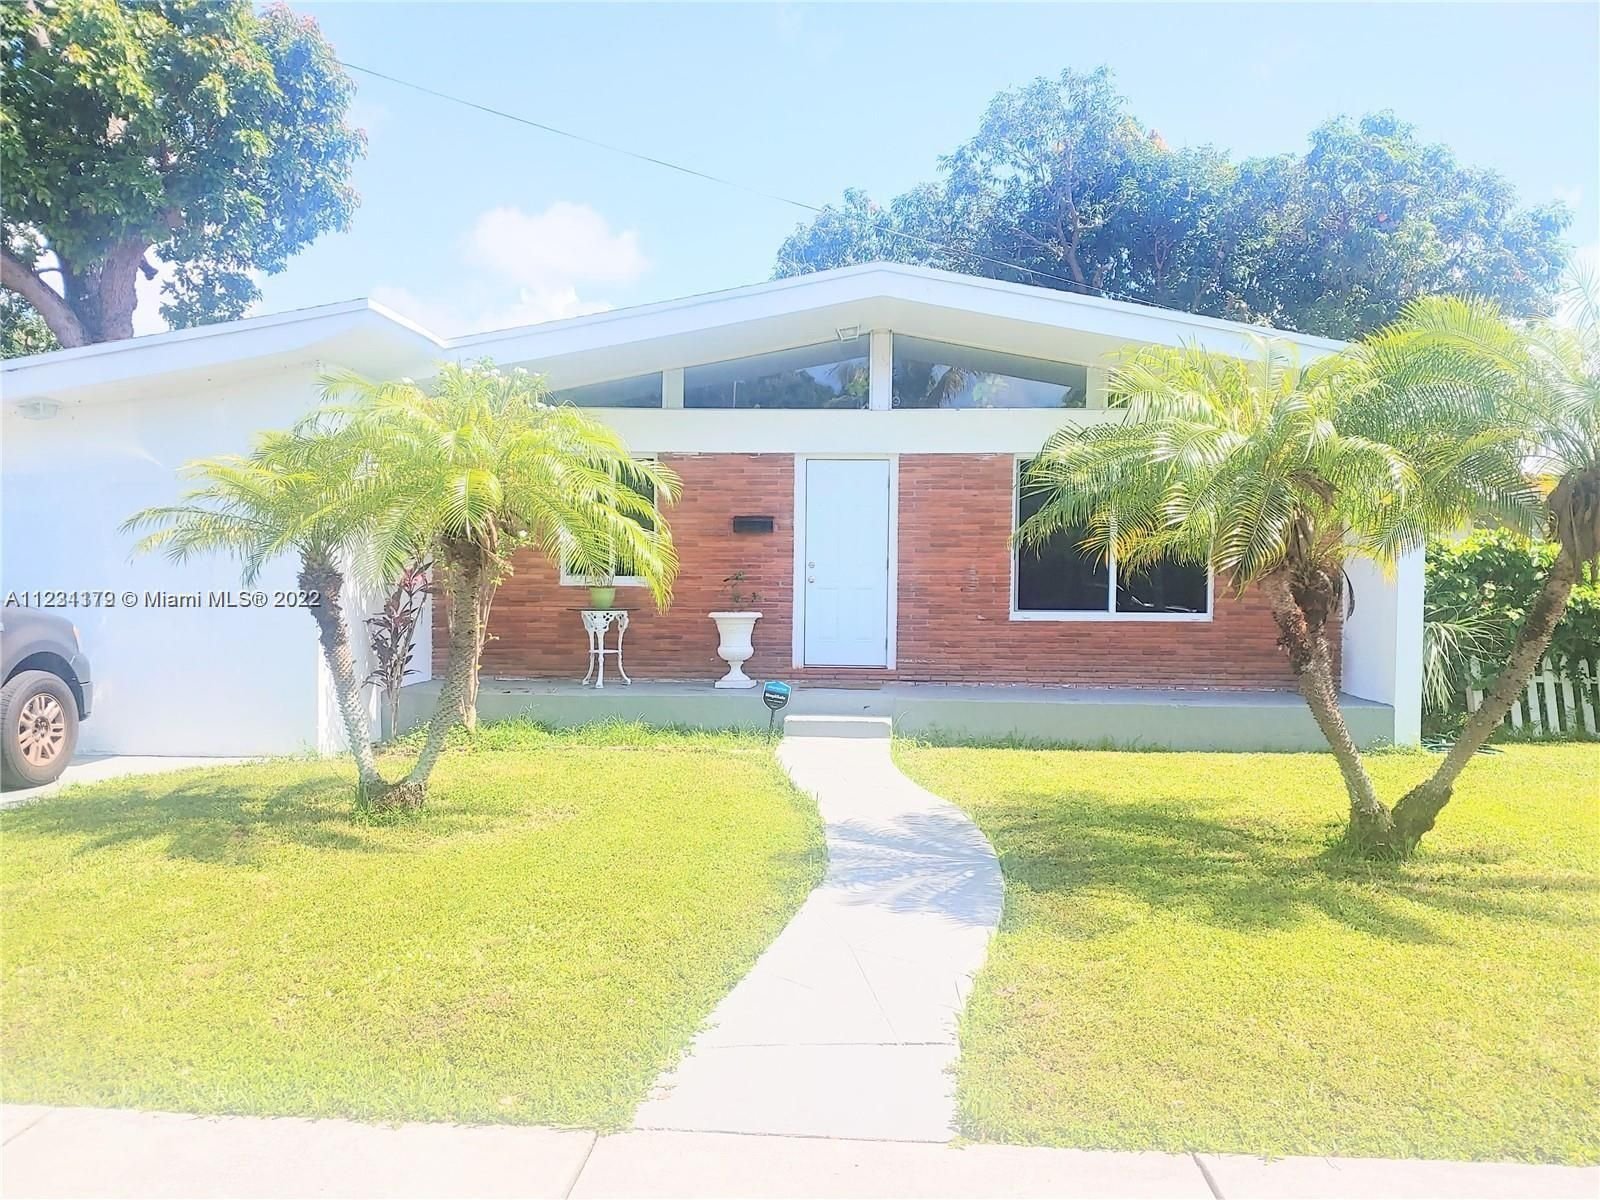 Real estate property located at 1511 49 St, Miami-Dade County, Miami, FL